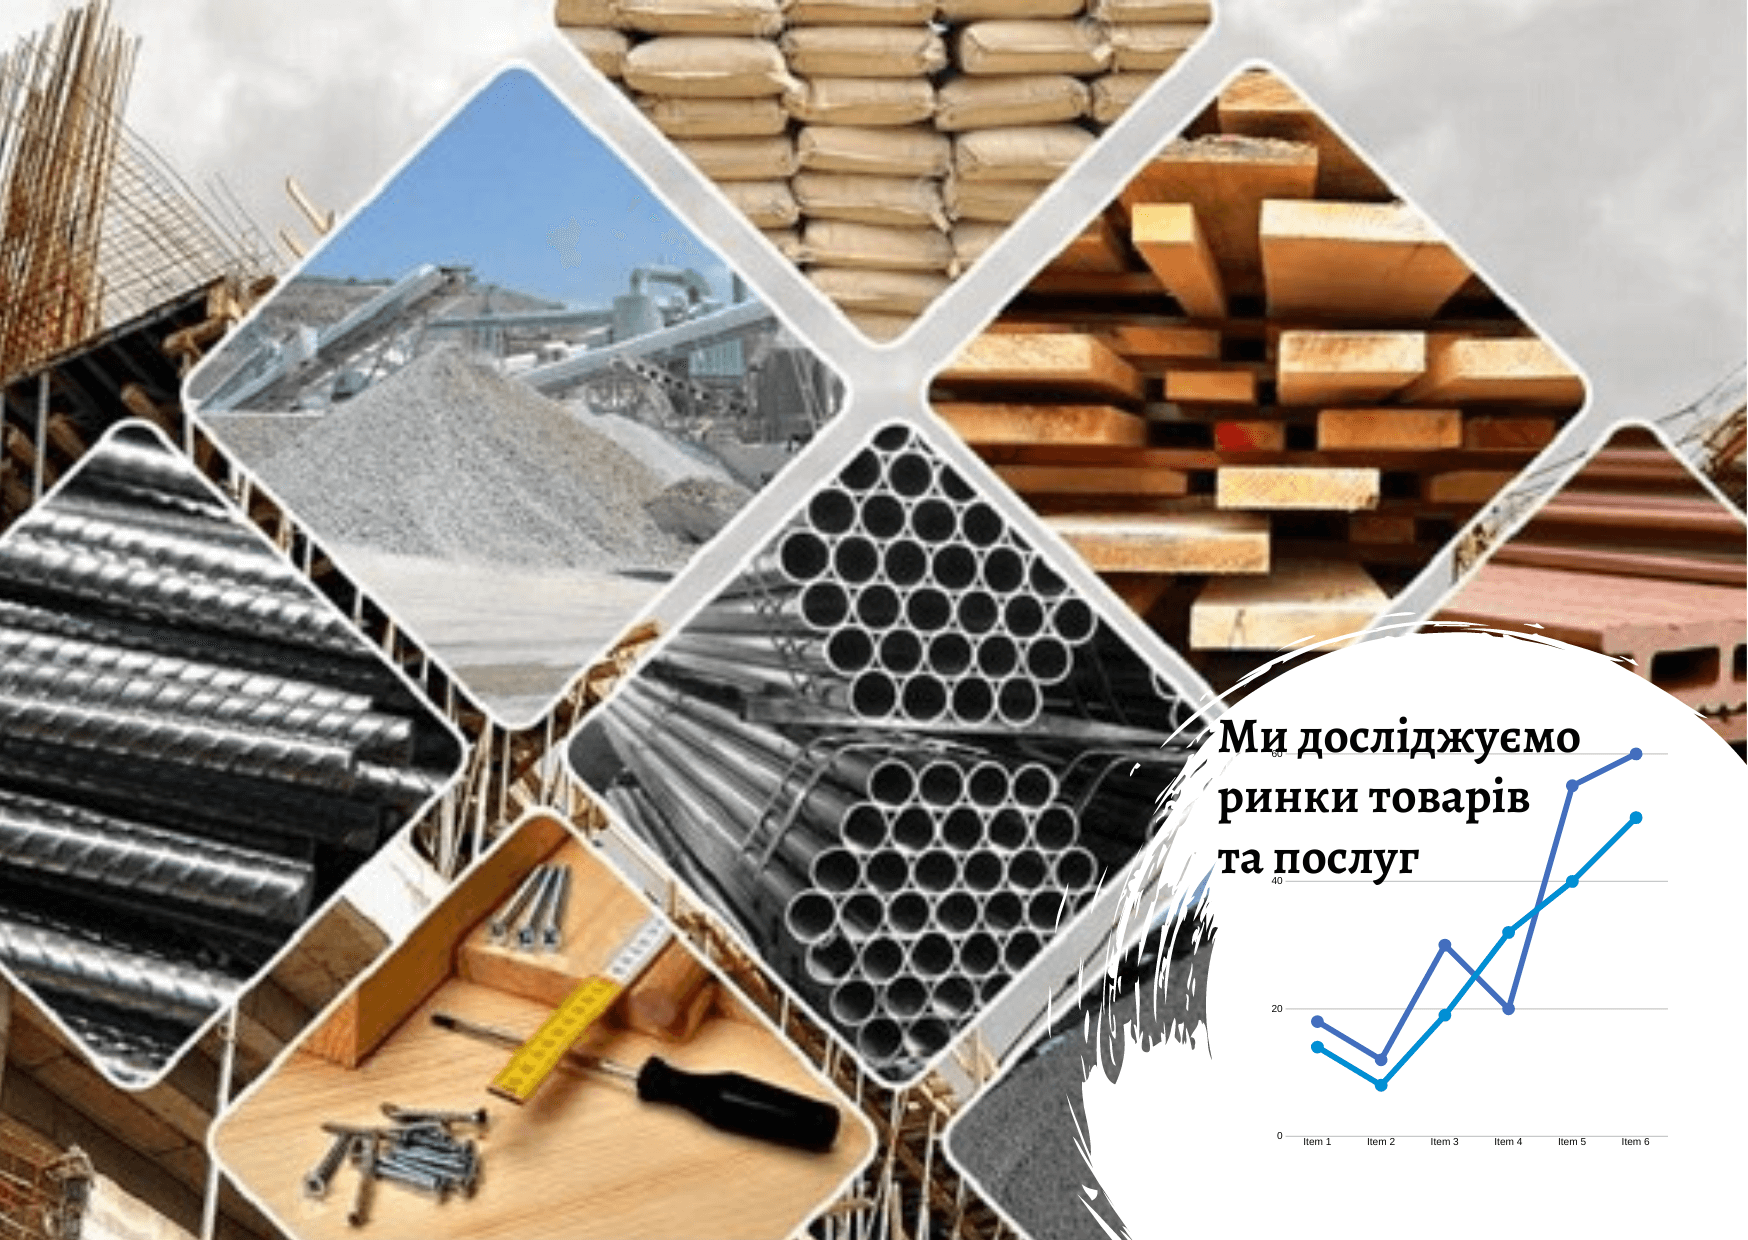 Ukrainian building materials market: analysis of the impact of the war